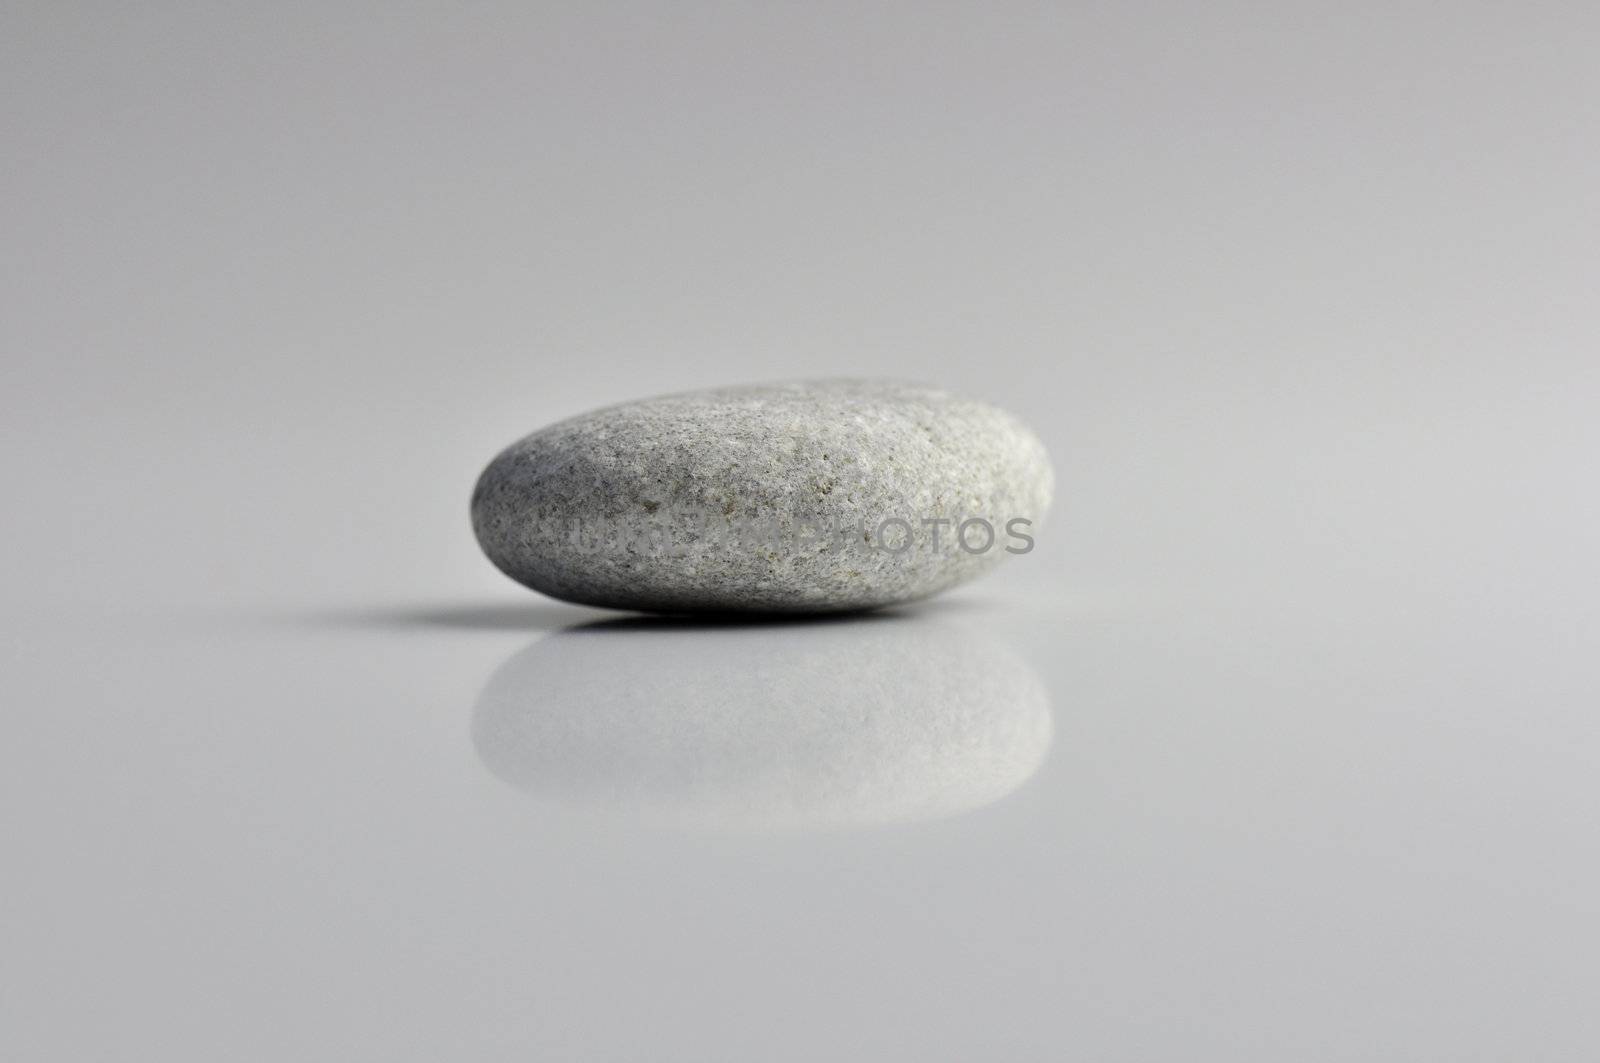 A grey pebble